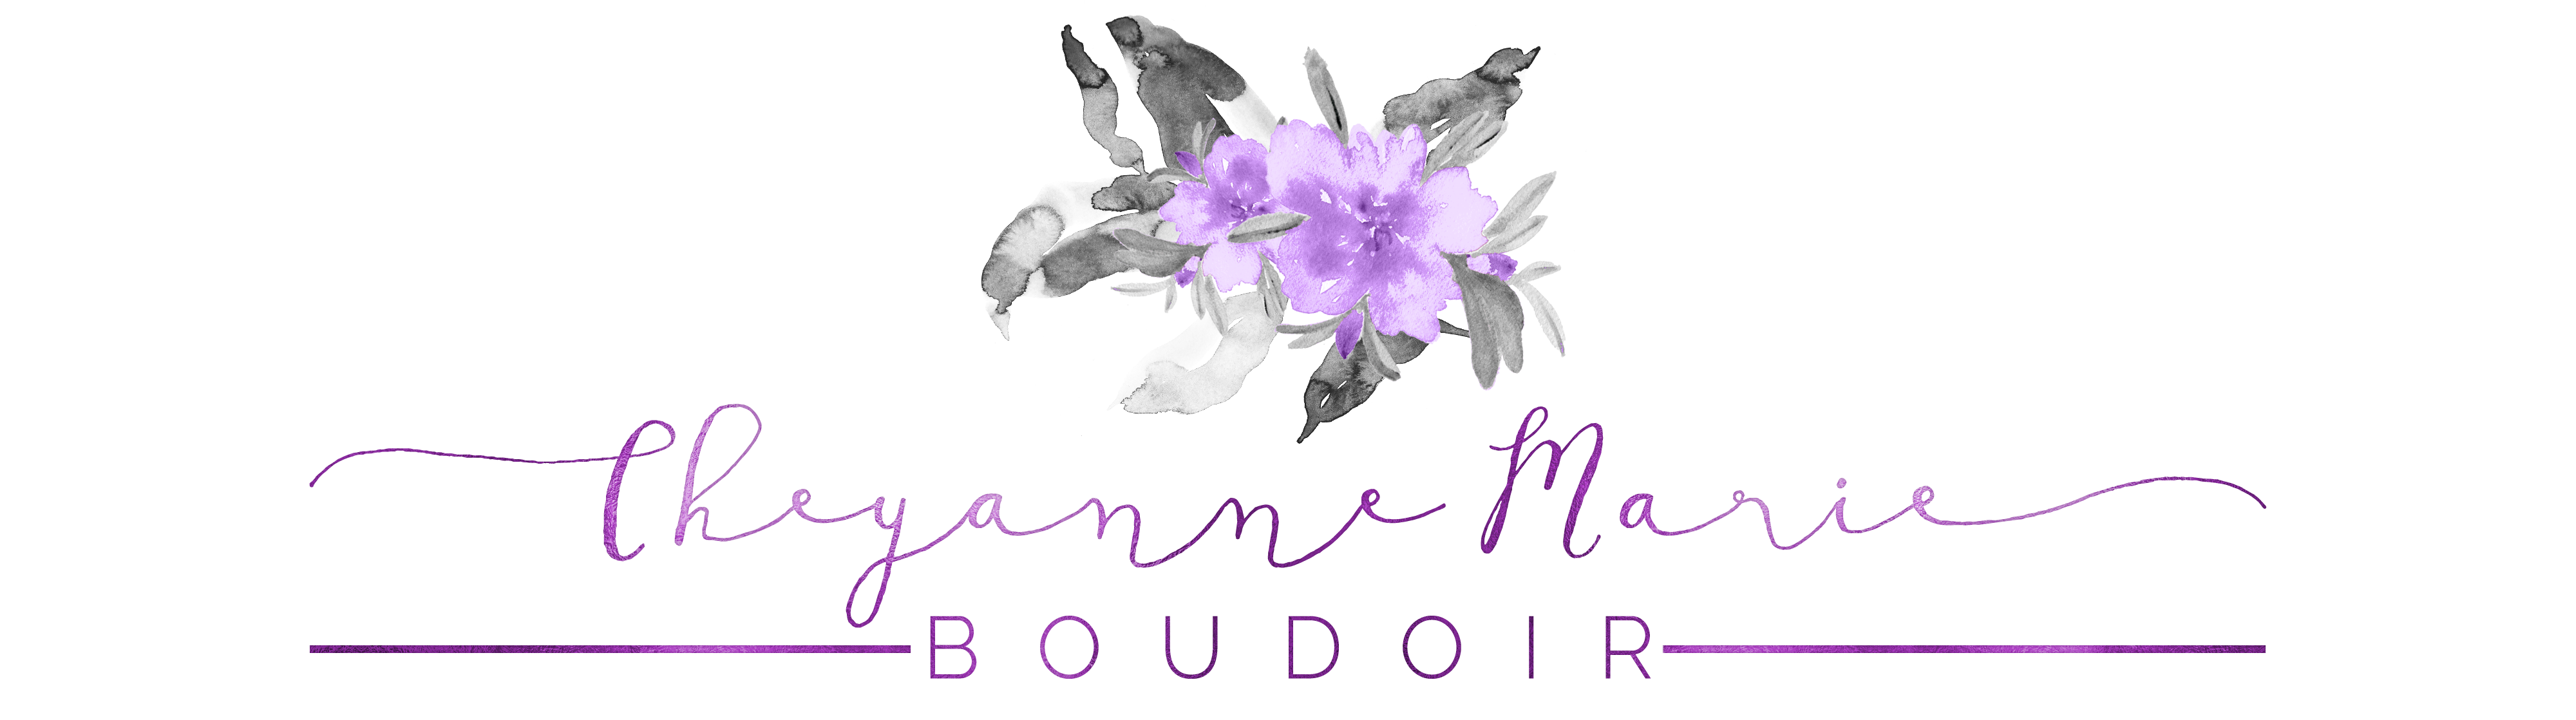 Cheyanne Marie Boudoir Logo